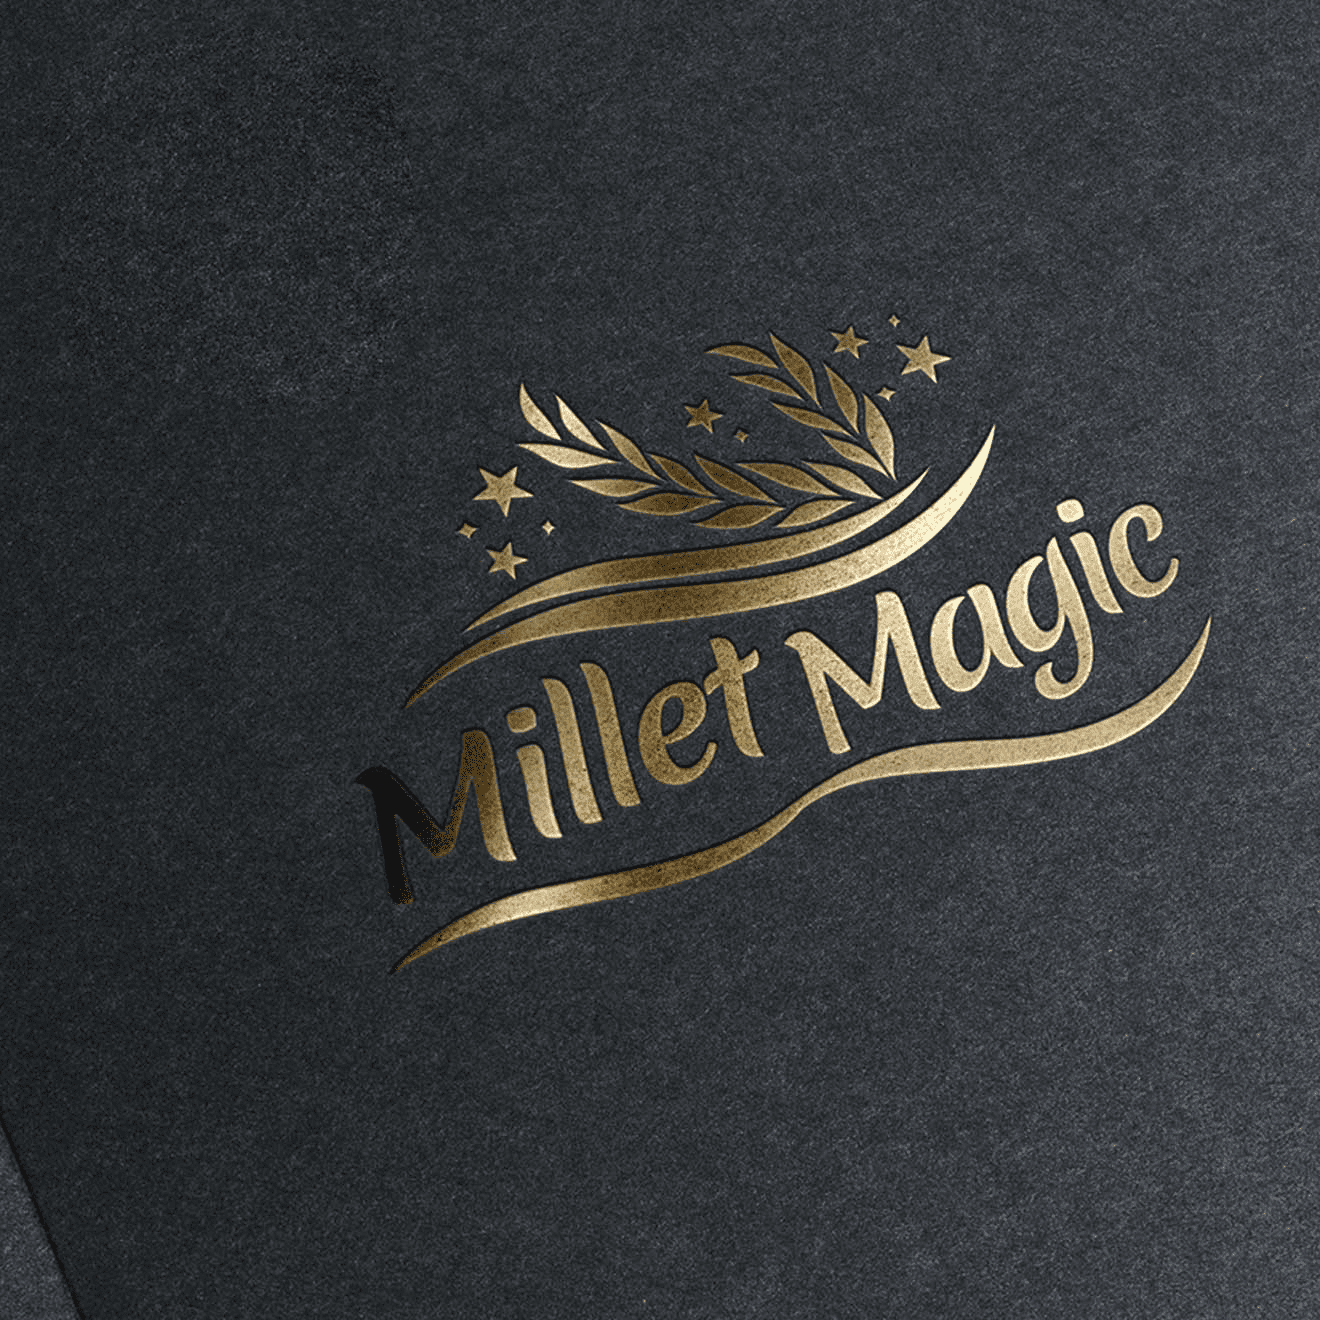 Millet Magic Gold Foil Branding Packaging Design Digital Marketing in Chennai by Violet Spark